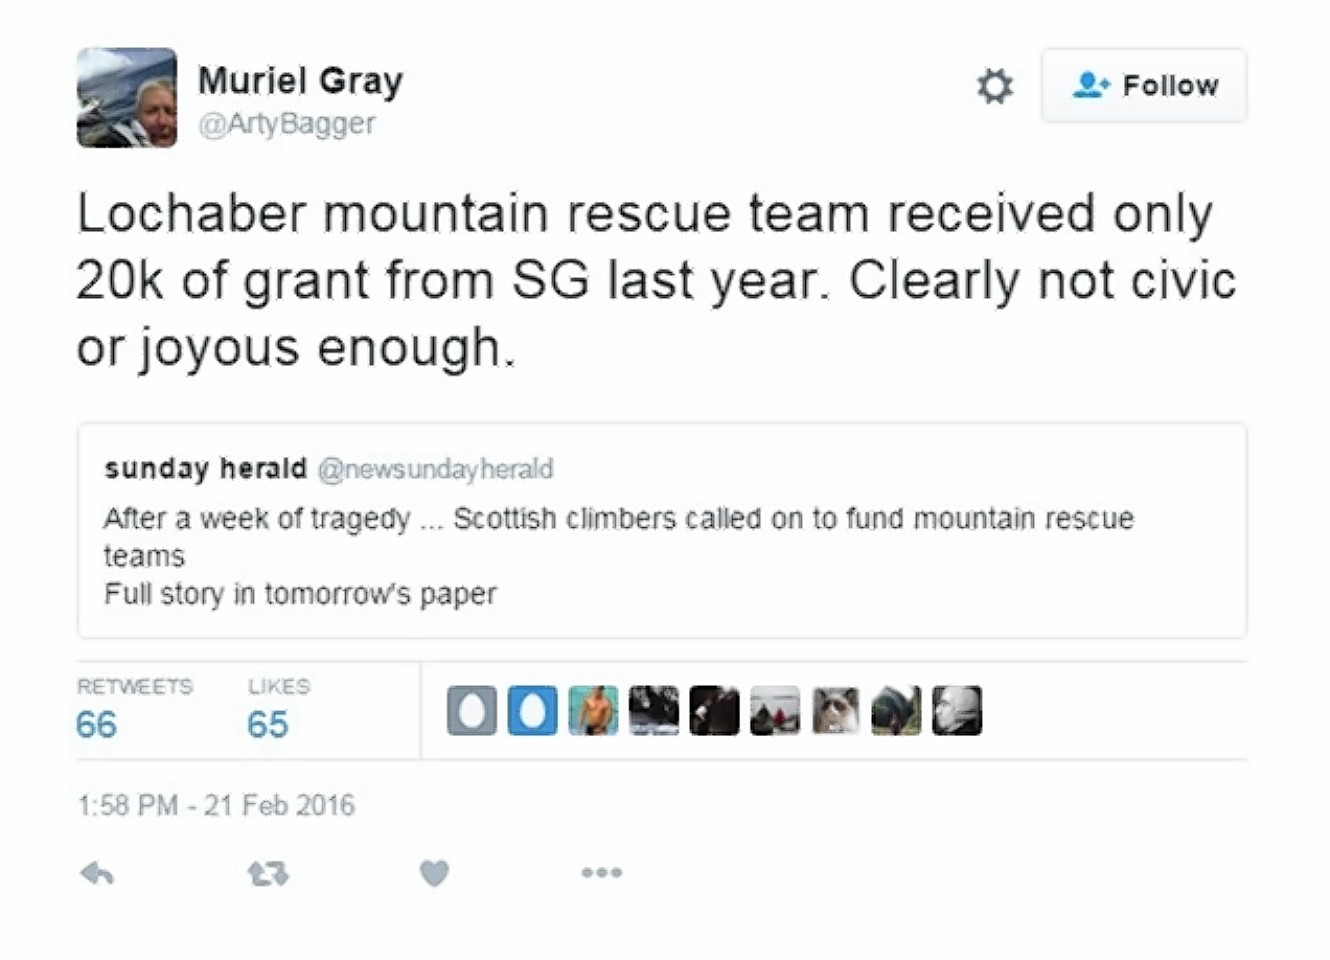 Muriel Gray tweet